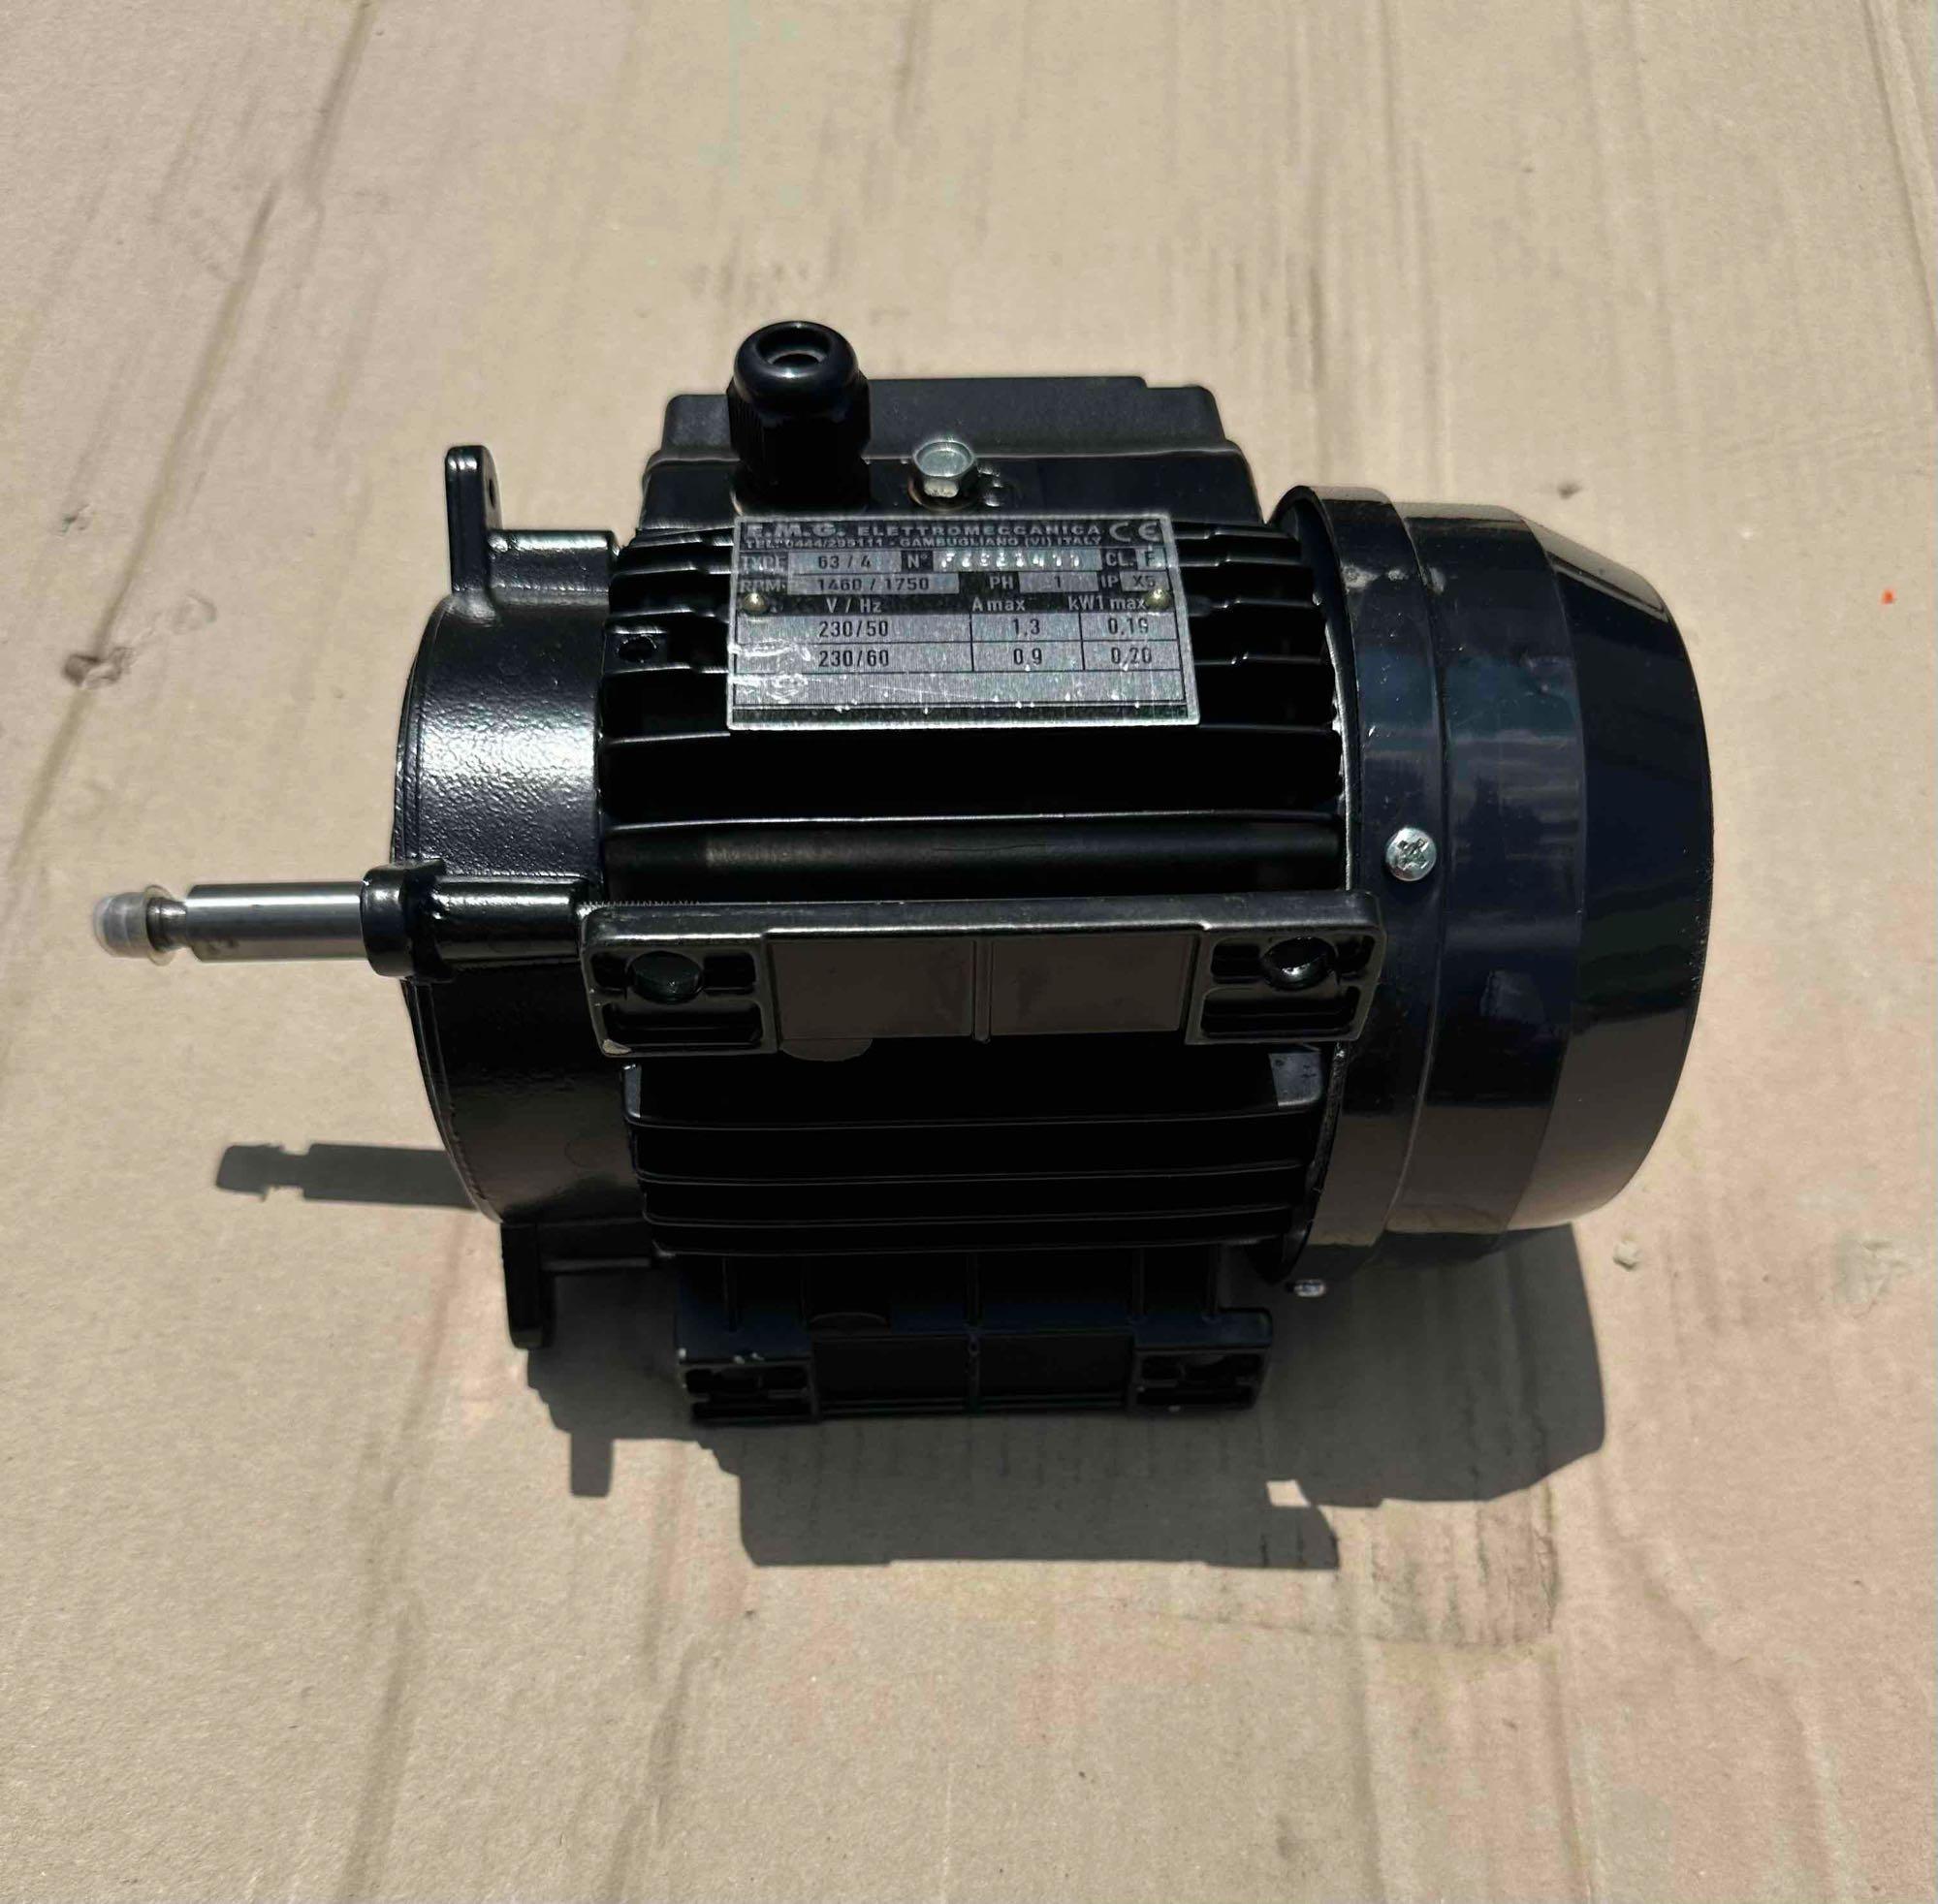 EMG 63/4 single-speed motor